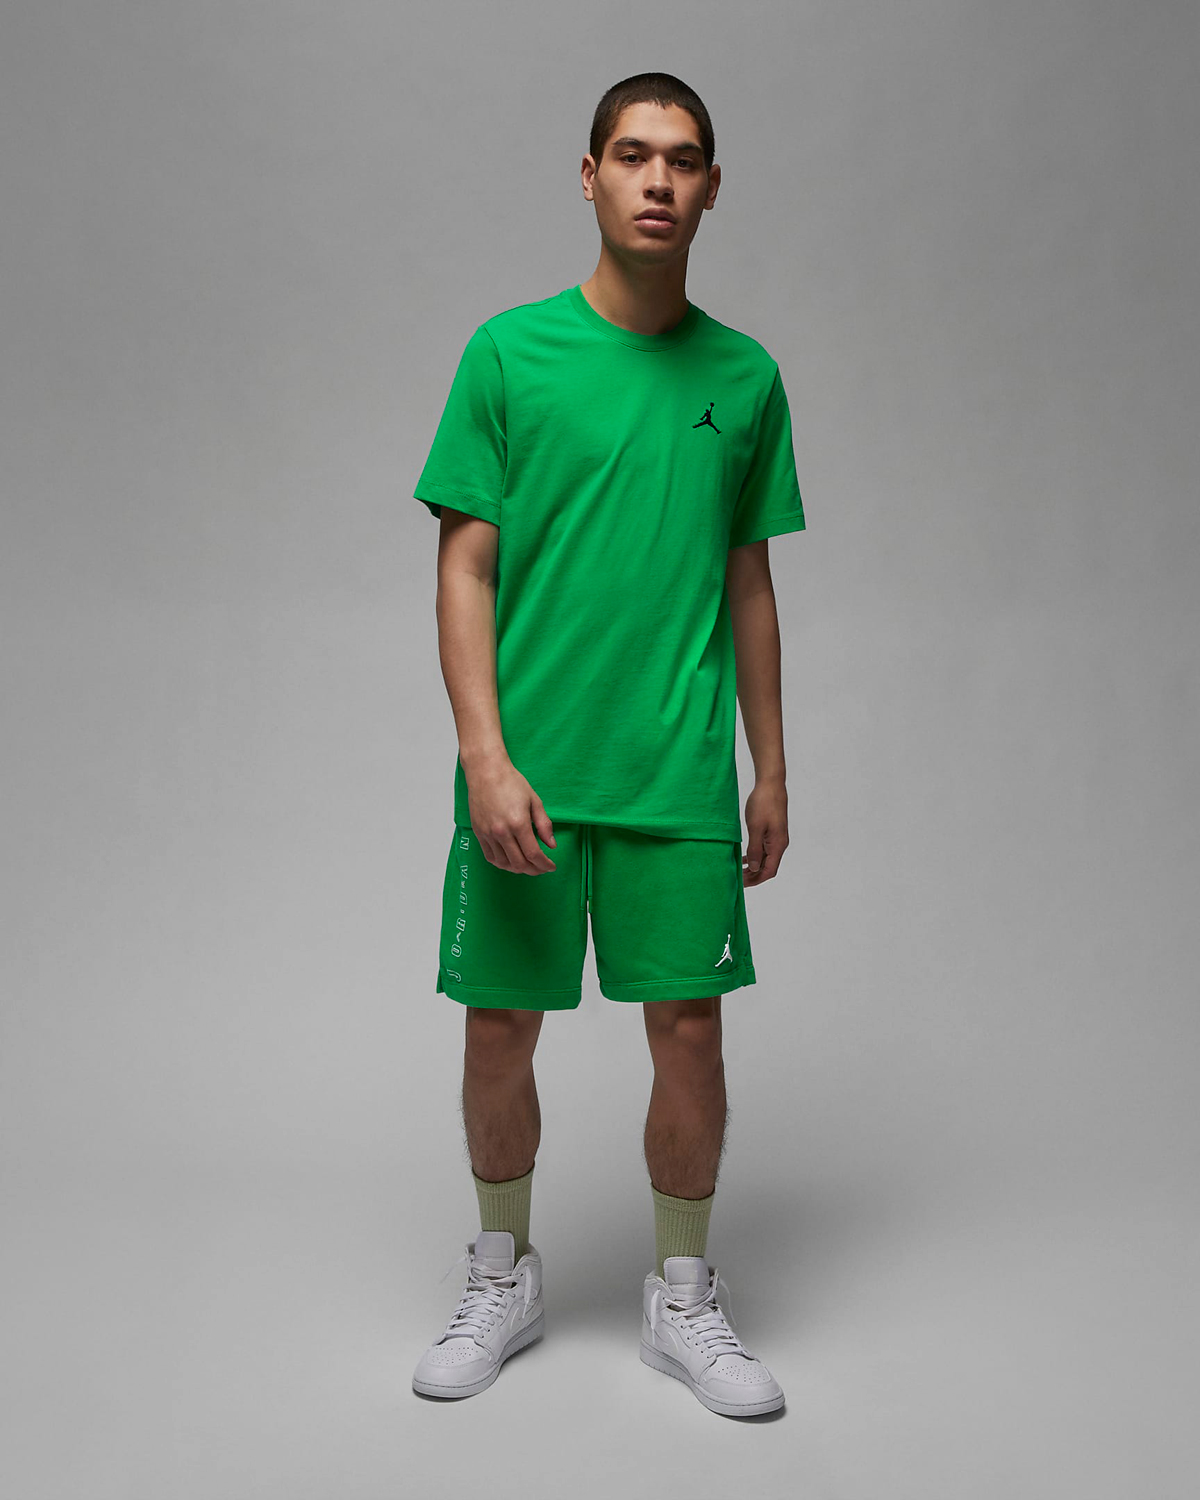 Jordan-Graphic-T-Shirt-Lucky-Green-Outfit